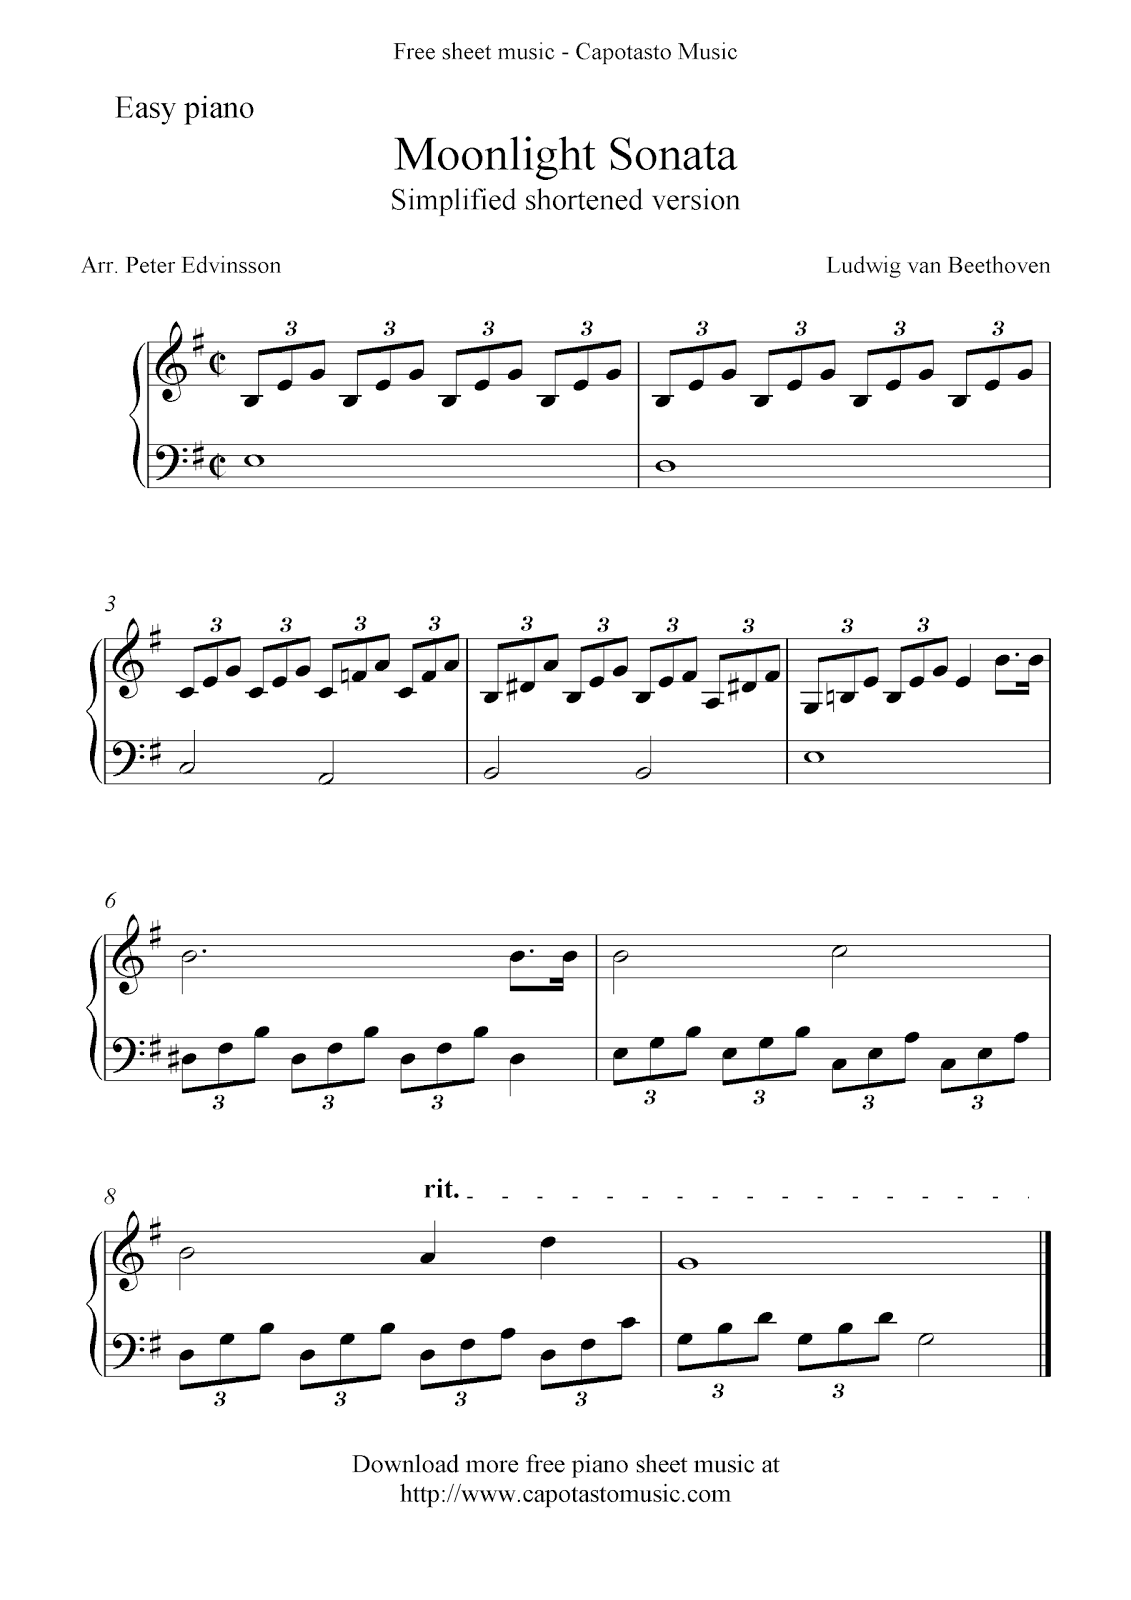 Free Printable Sheet Music Free easy piano sheet music, Moonlight